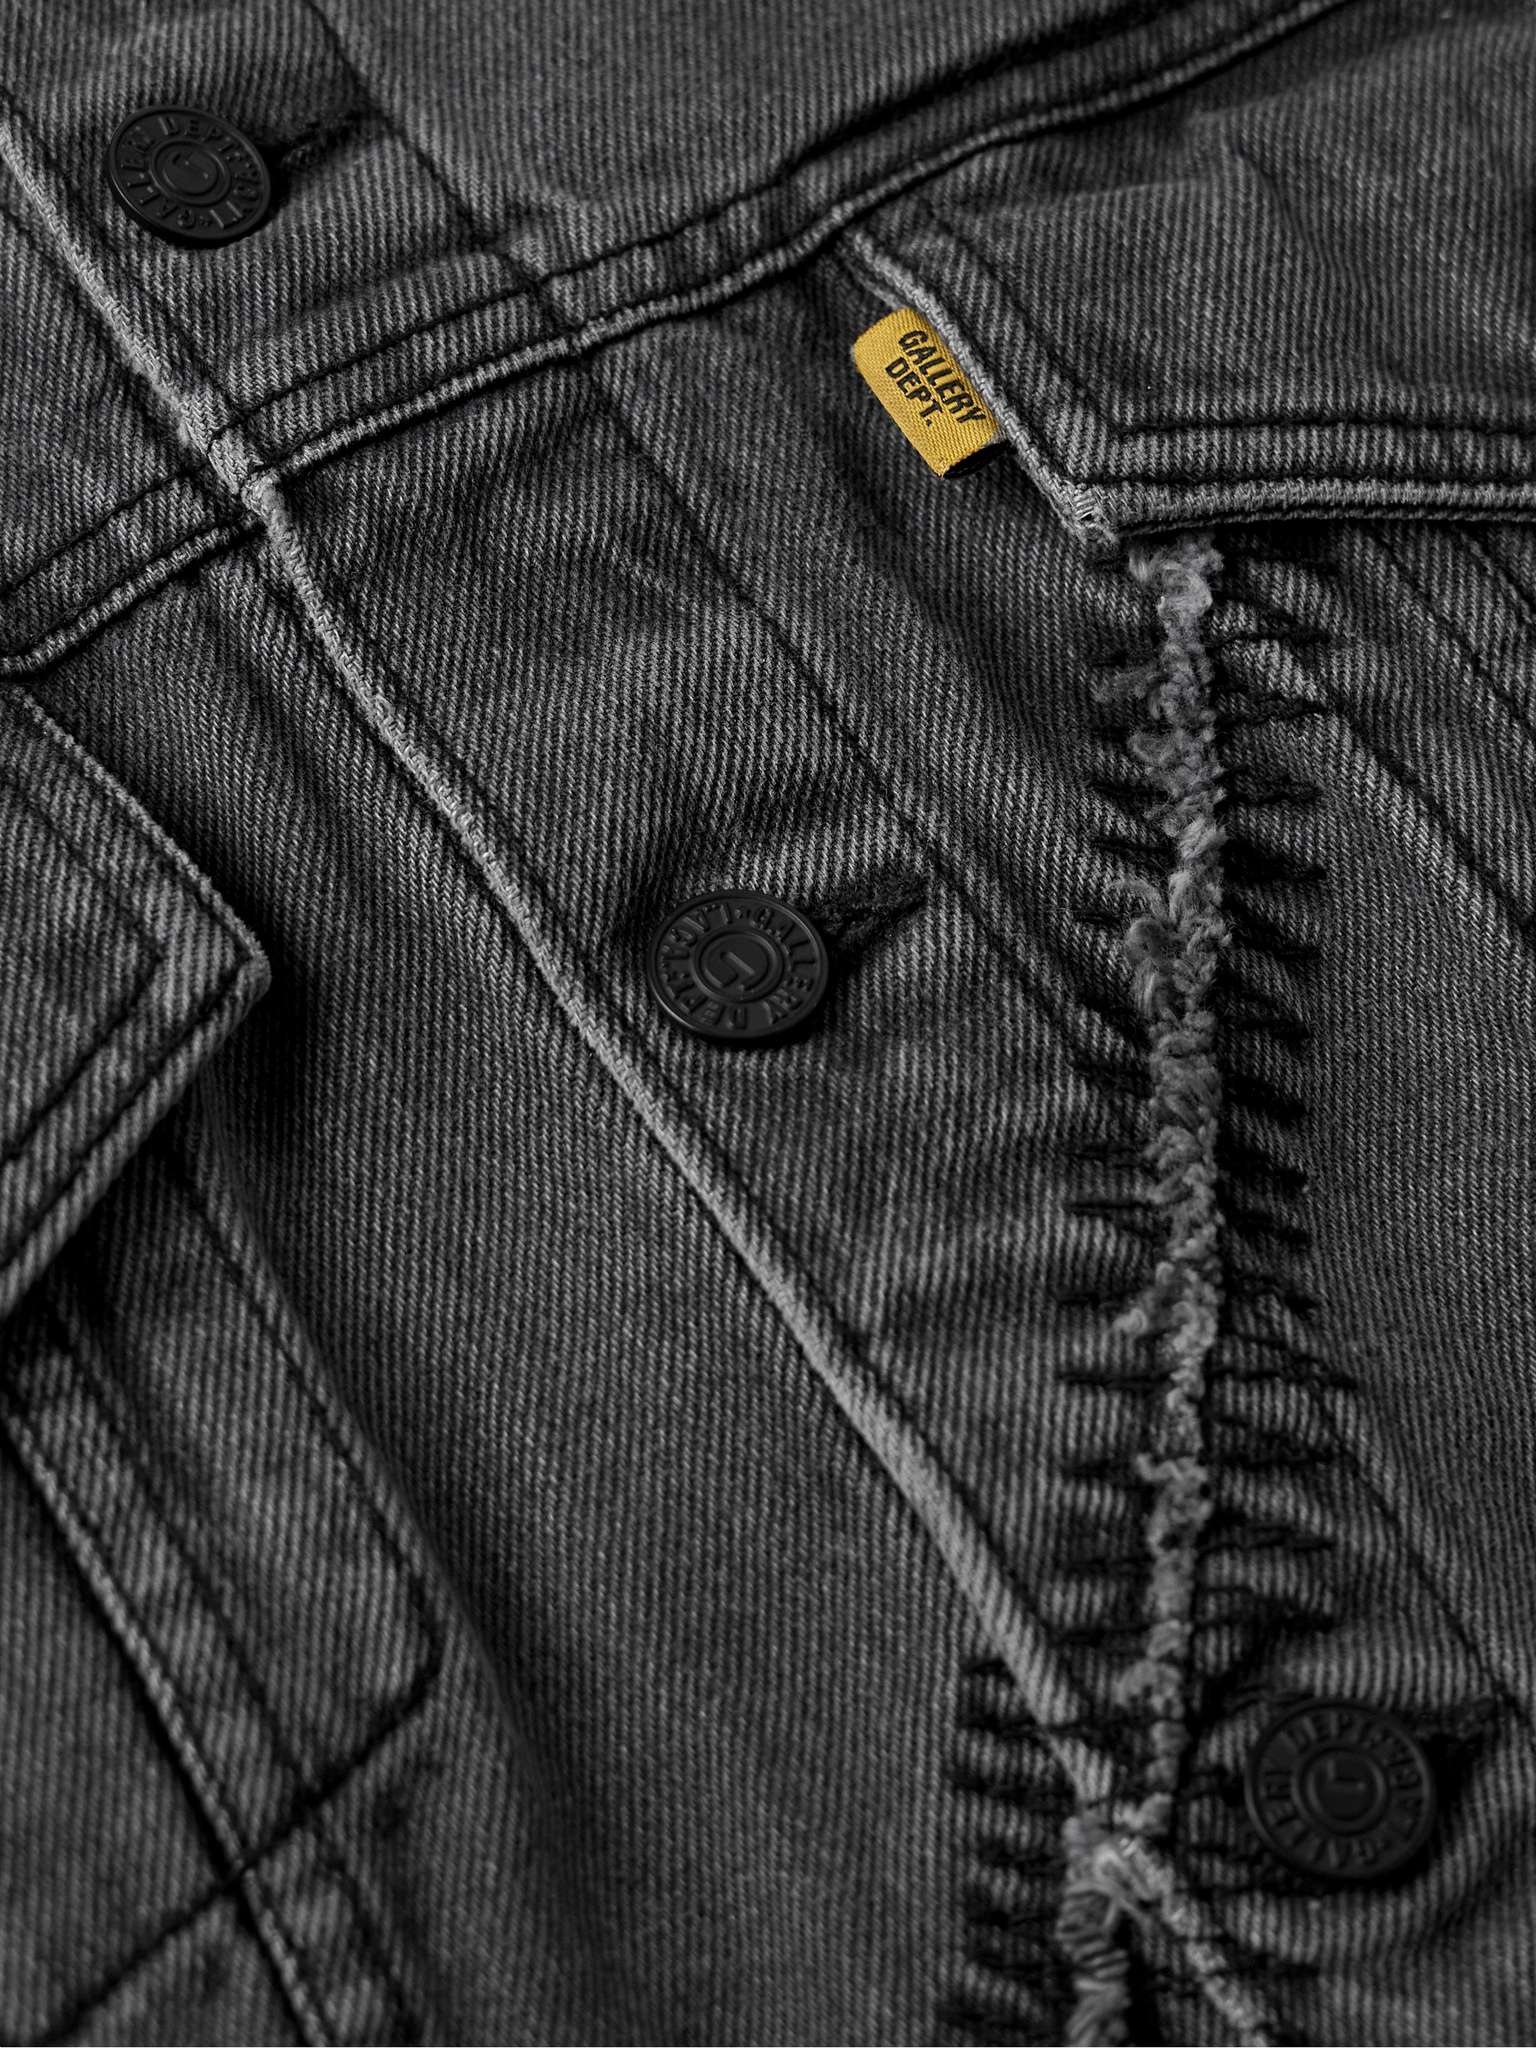 Scar Embroidered Distressed Denim Jacket - 5